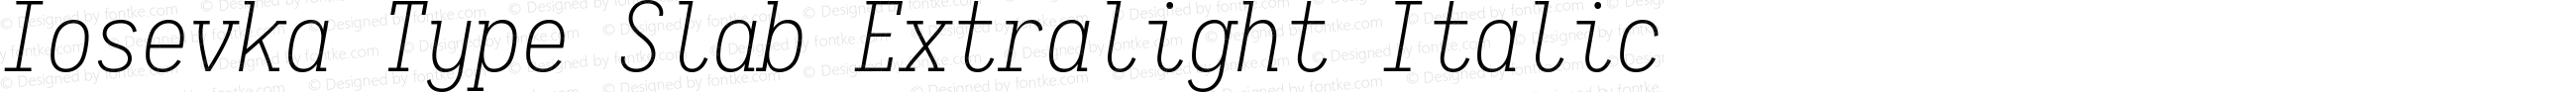 Iosevka Type Slab Extralight Italic